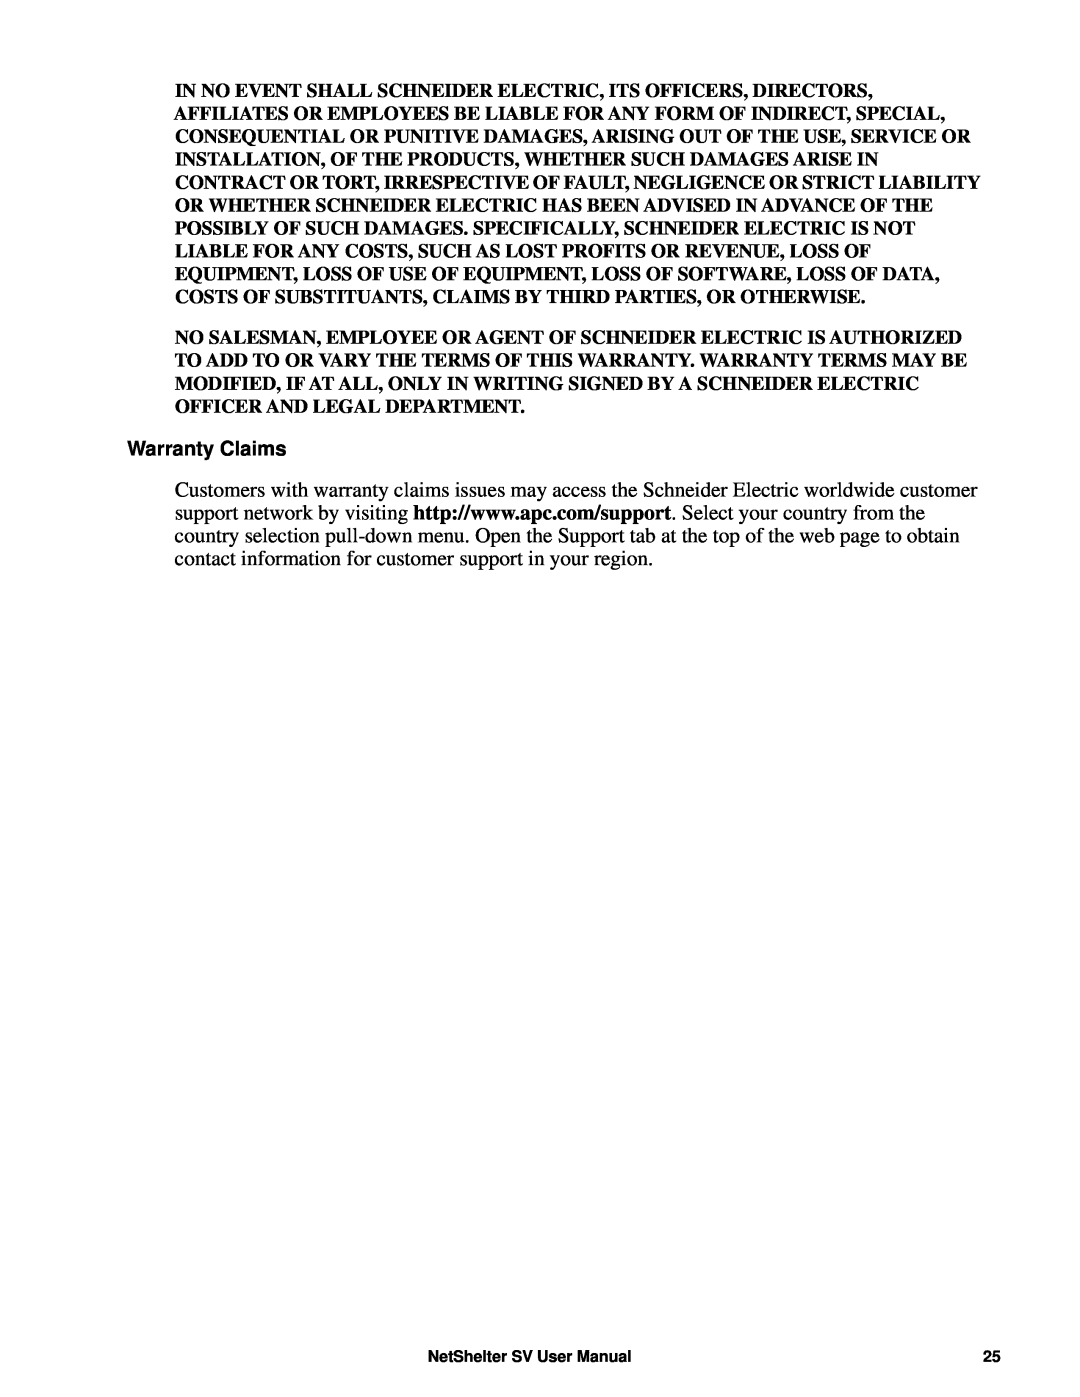 APC AR2400 user manual Warranty Claims, NetShelter SV User Manual 